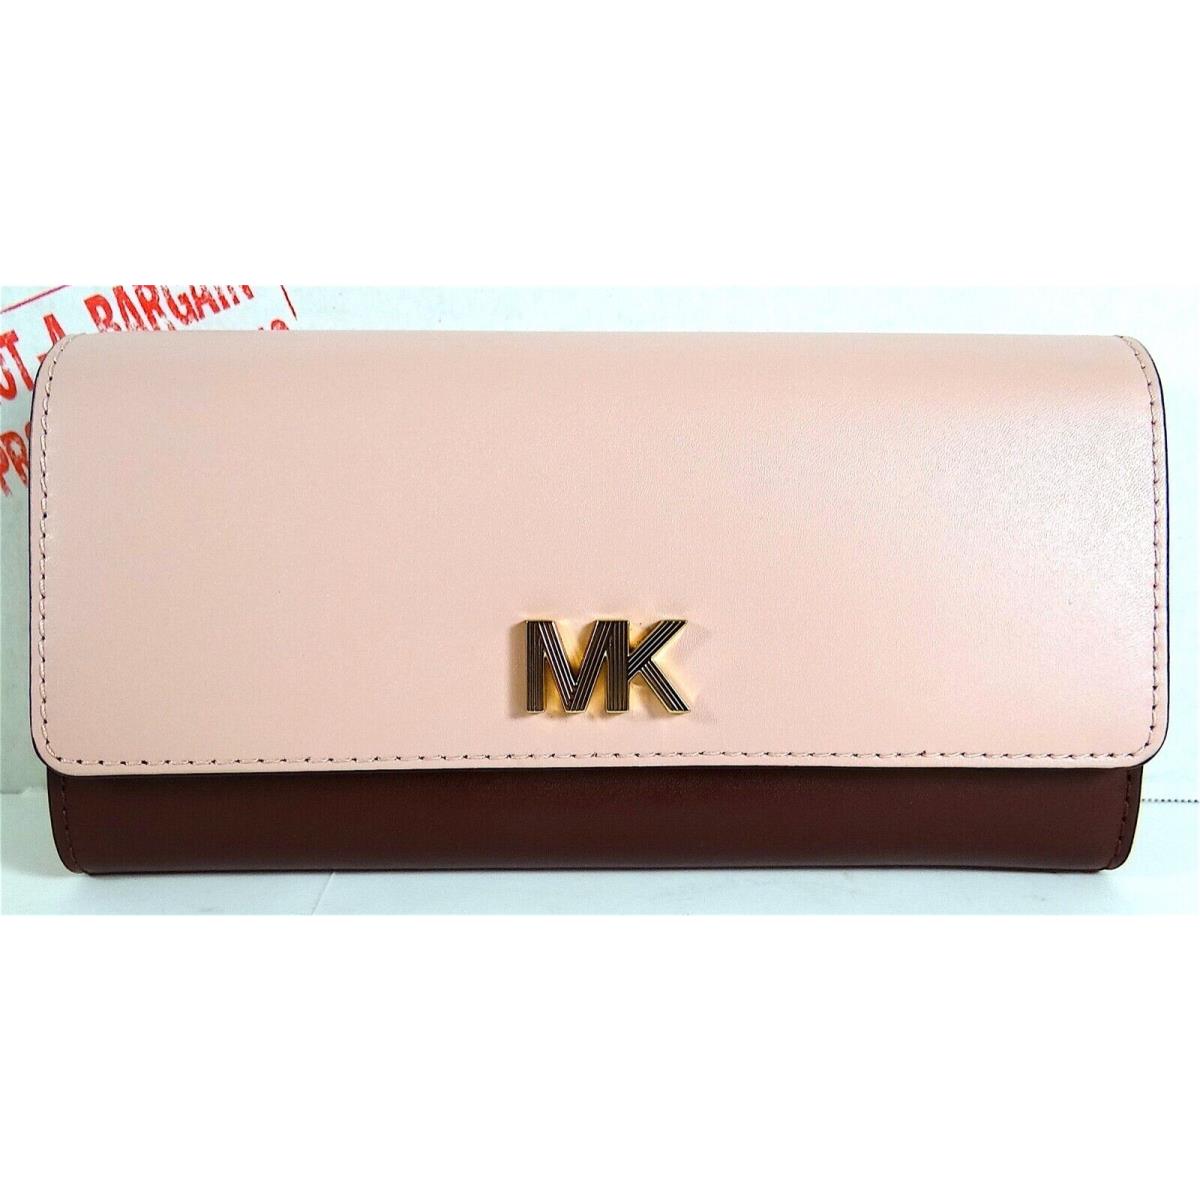 Michael Kors wallet 